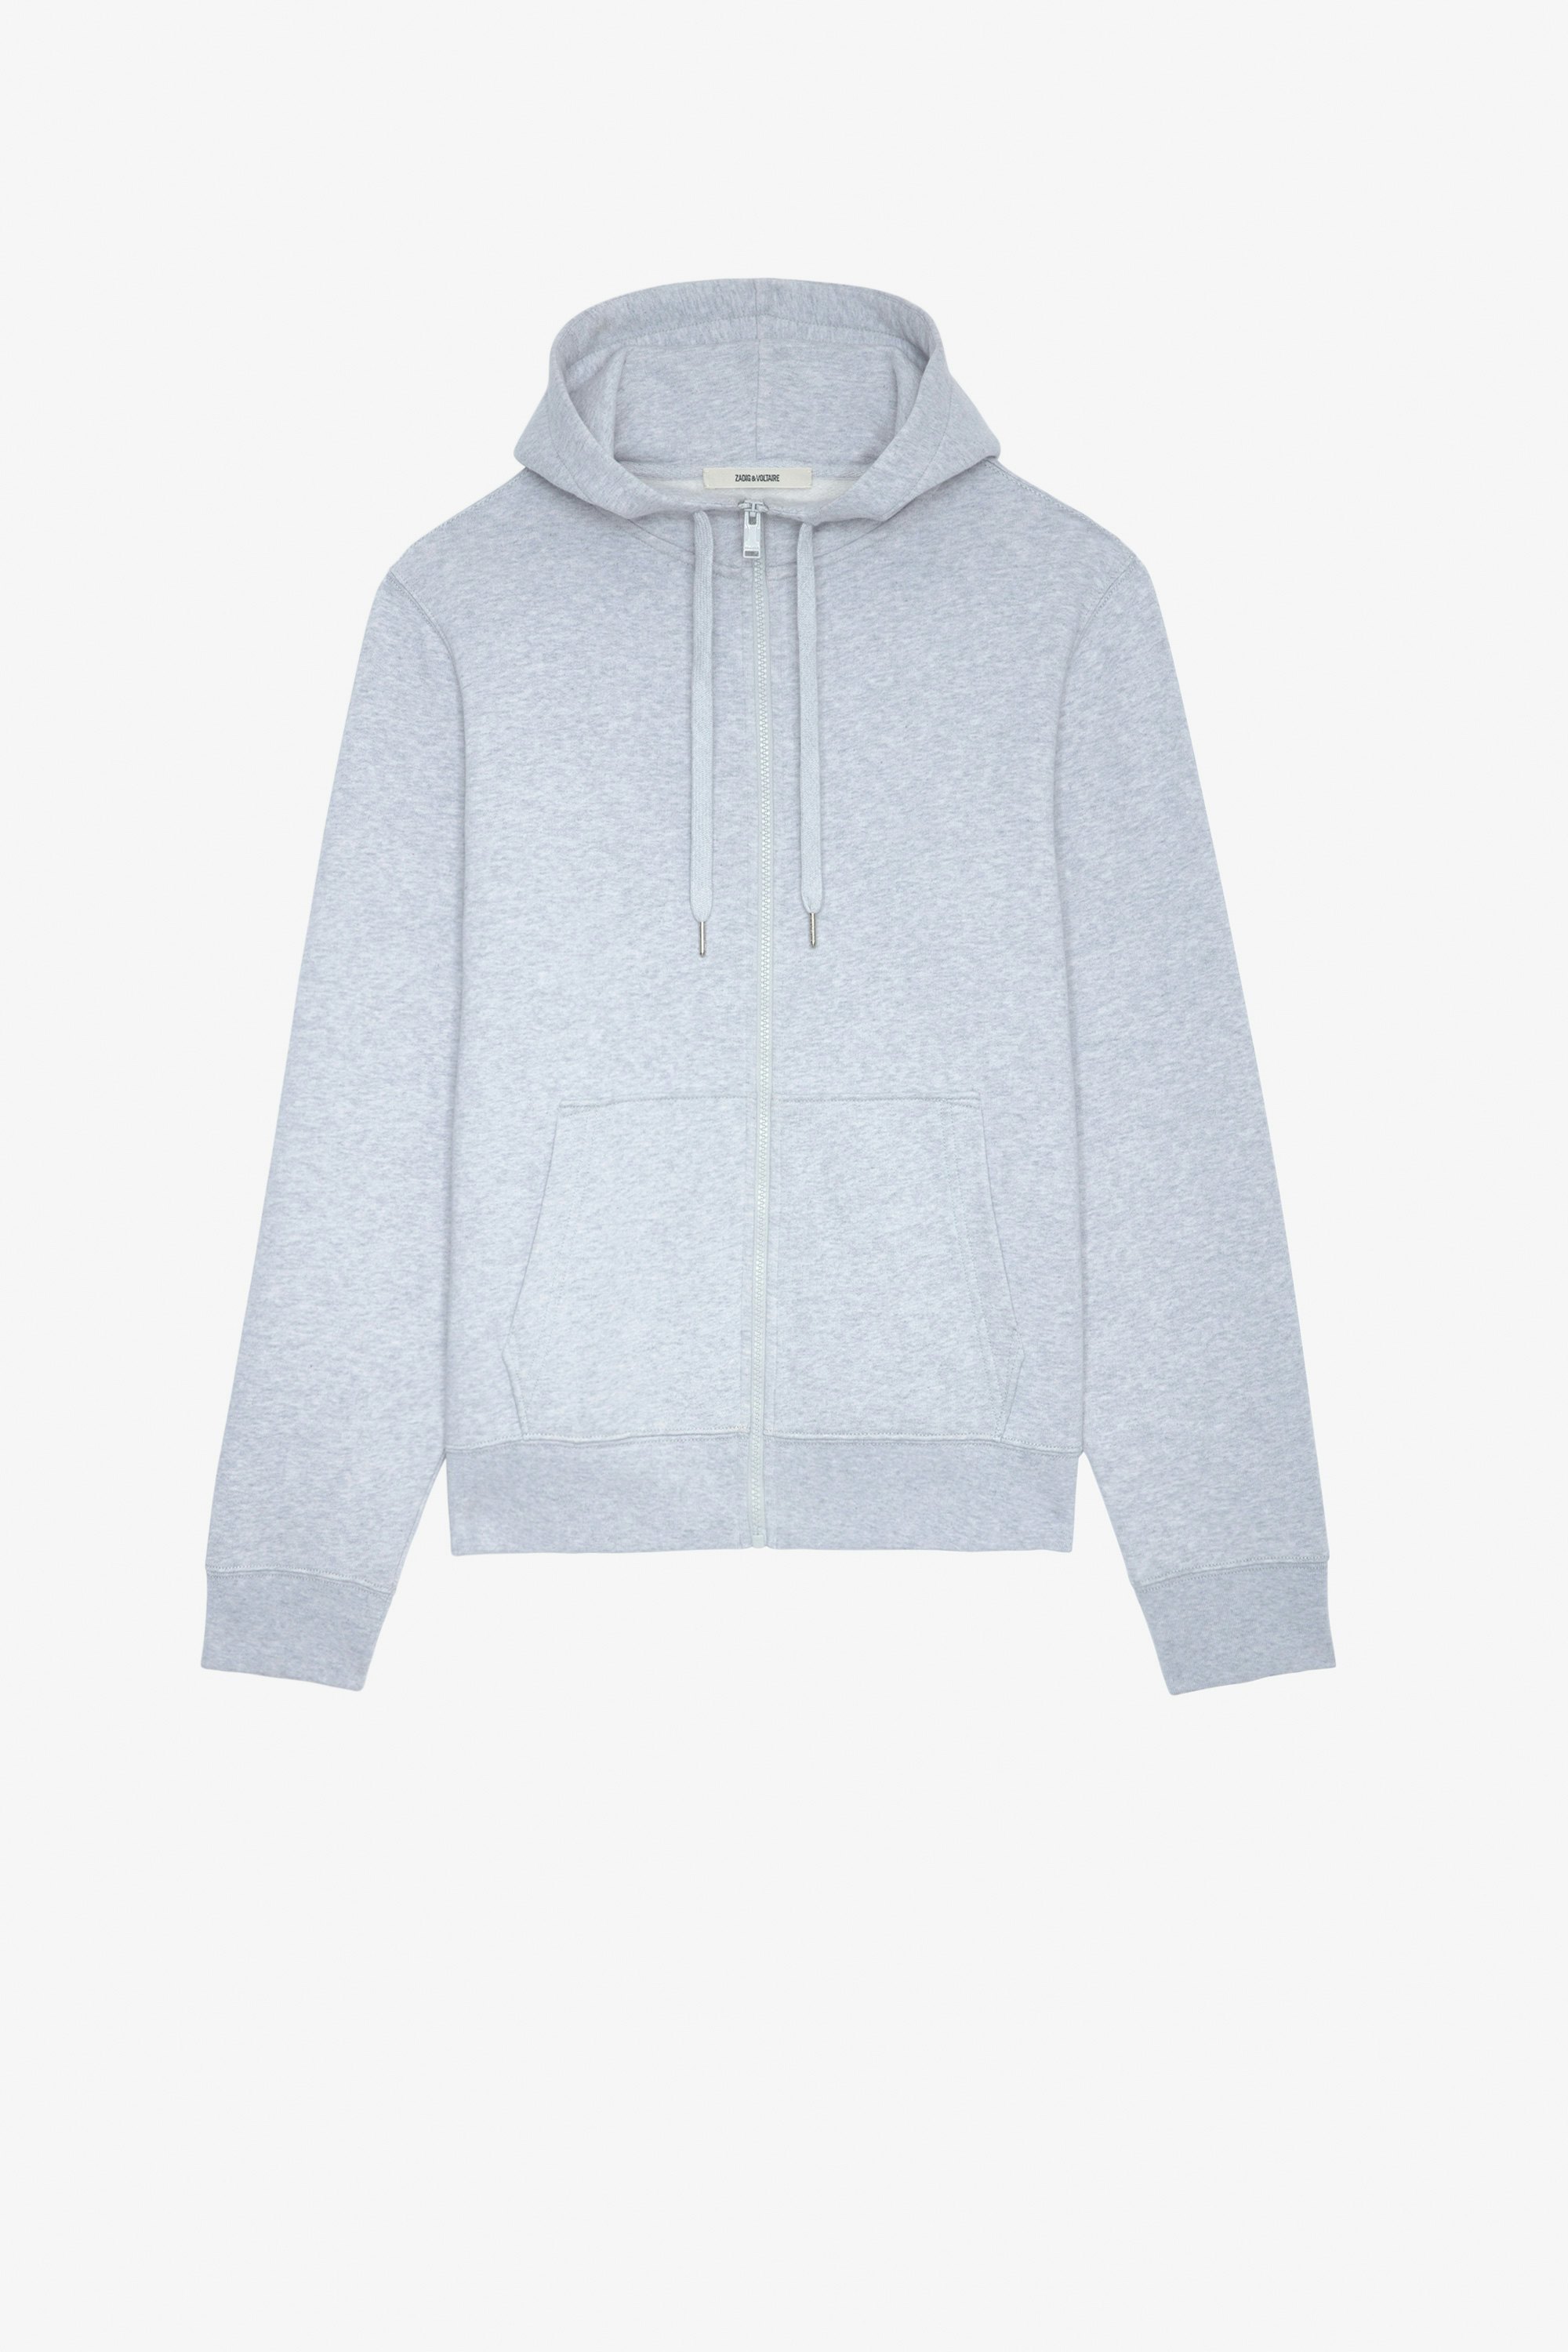 Alex Hoodie Men’s grey zip-up hoodie with arrow decoration on the back.